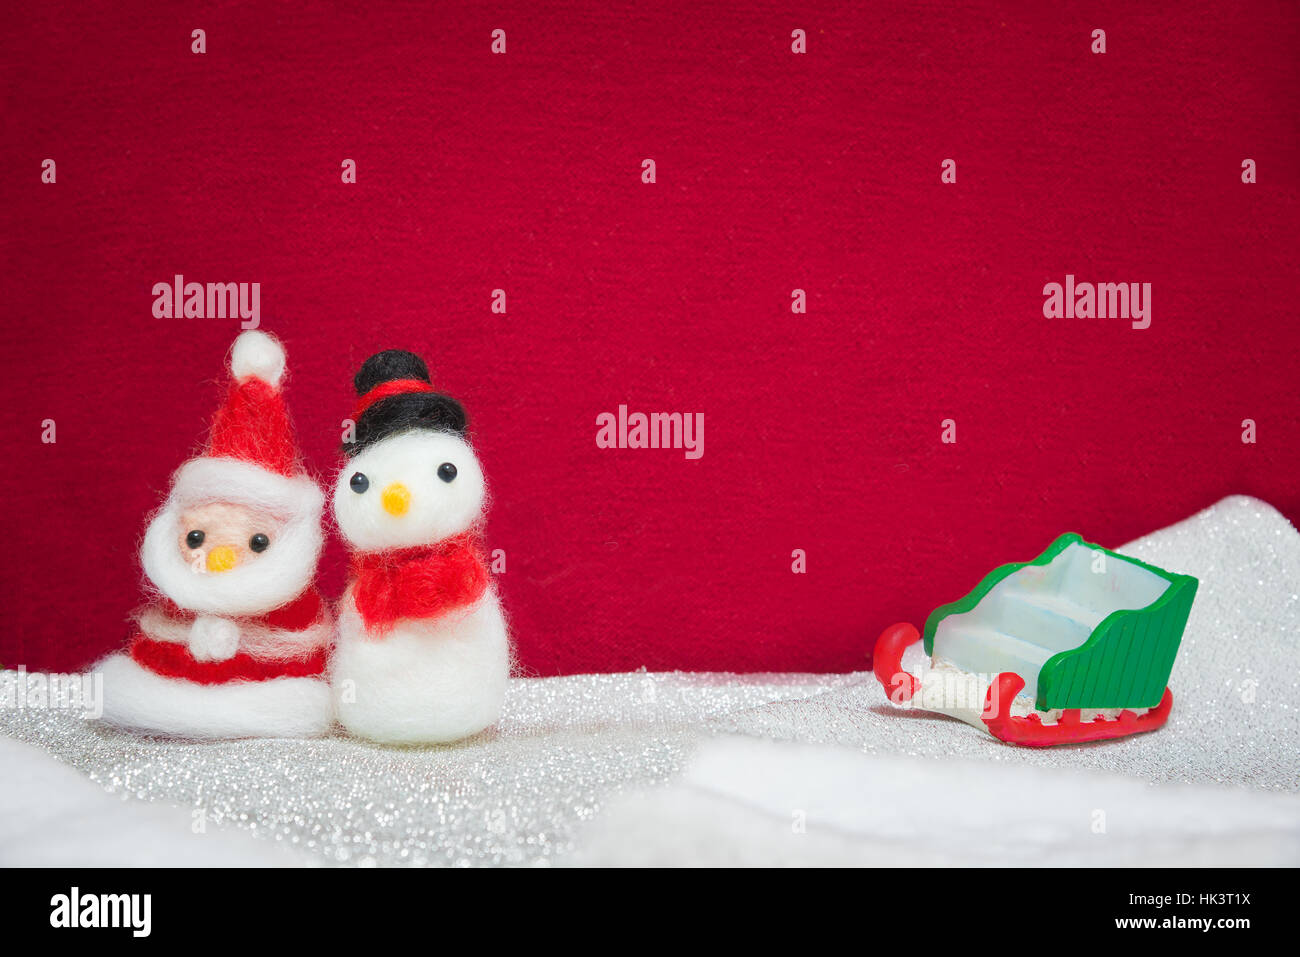 Snowman cartoon hi-res stock photography and images - Alamy